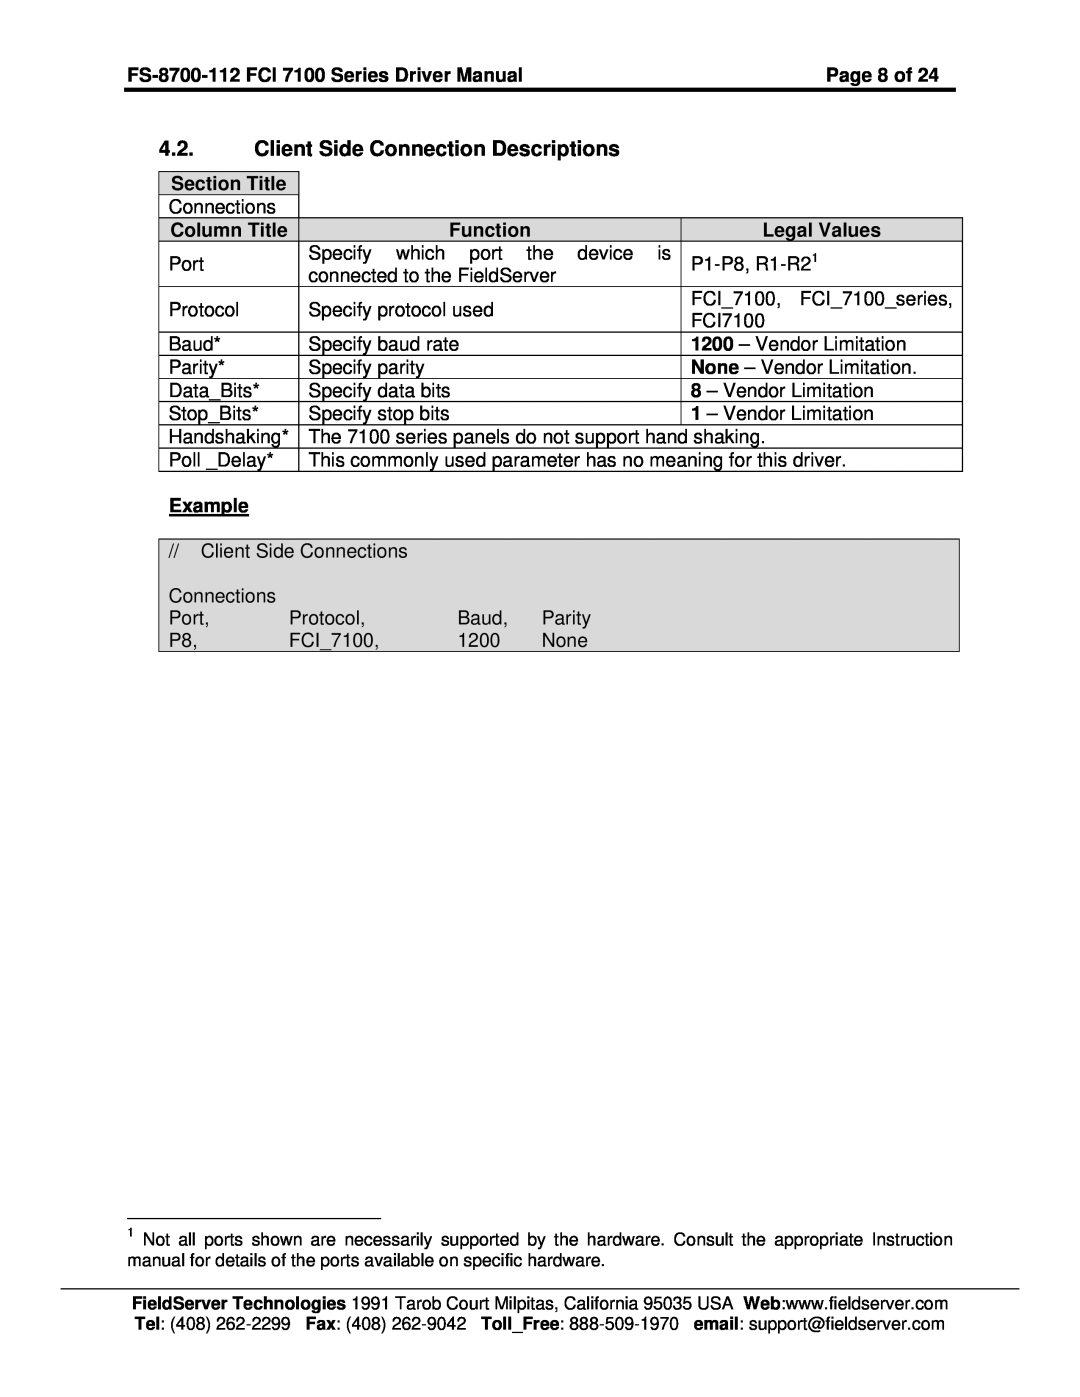 FieldServer Client Side Connection Descriptions, Page 8 of, FS-8700-112 FCI 7100 Series Driver Manual, Section Title 